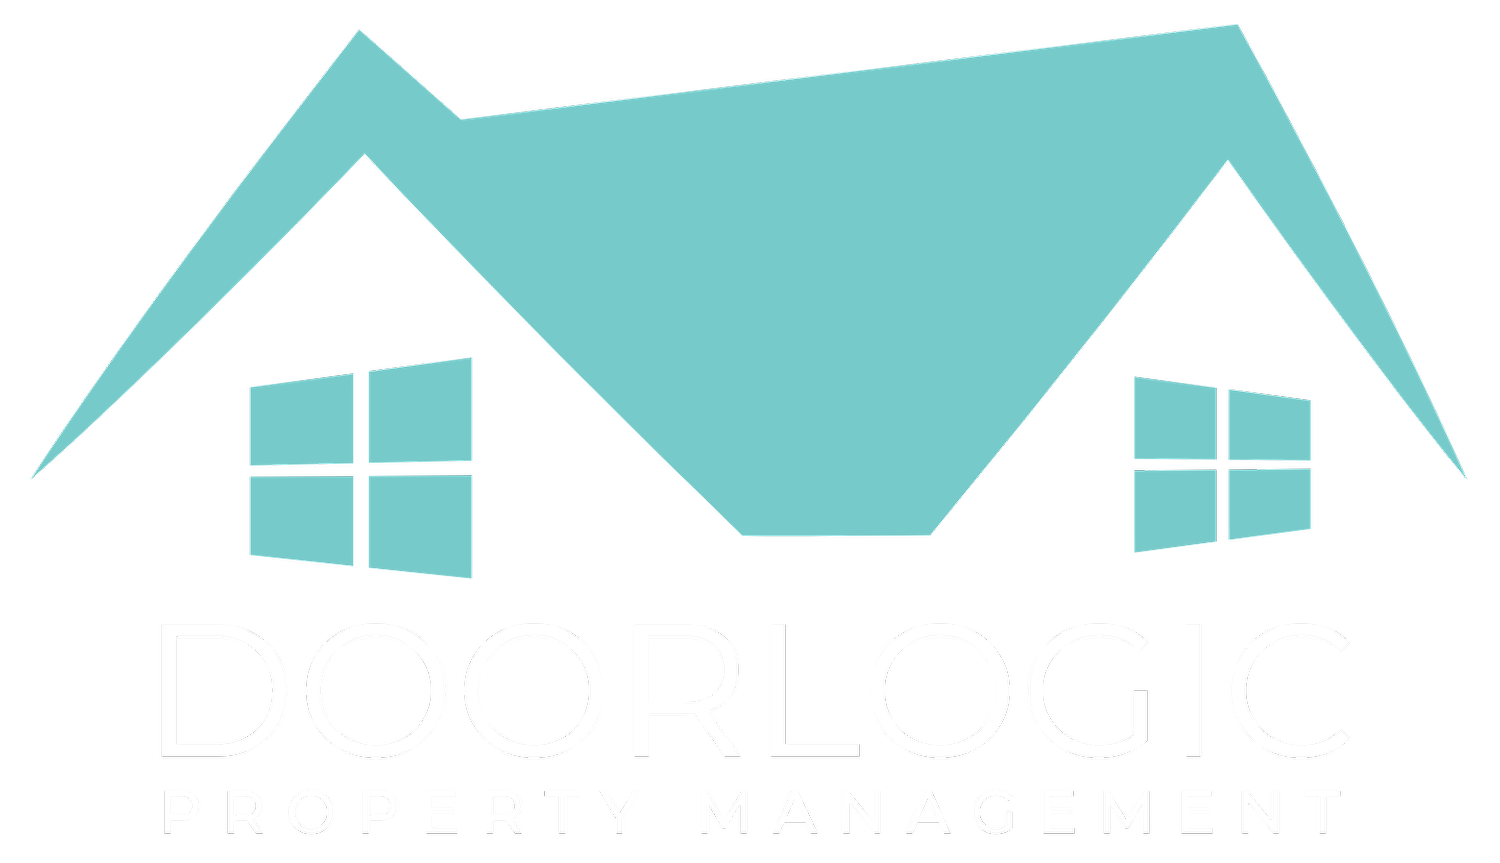 DoorLogic Property Management